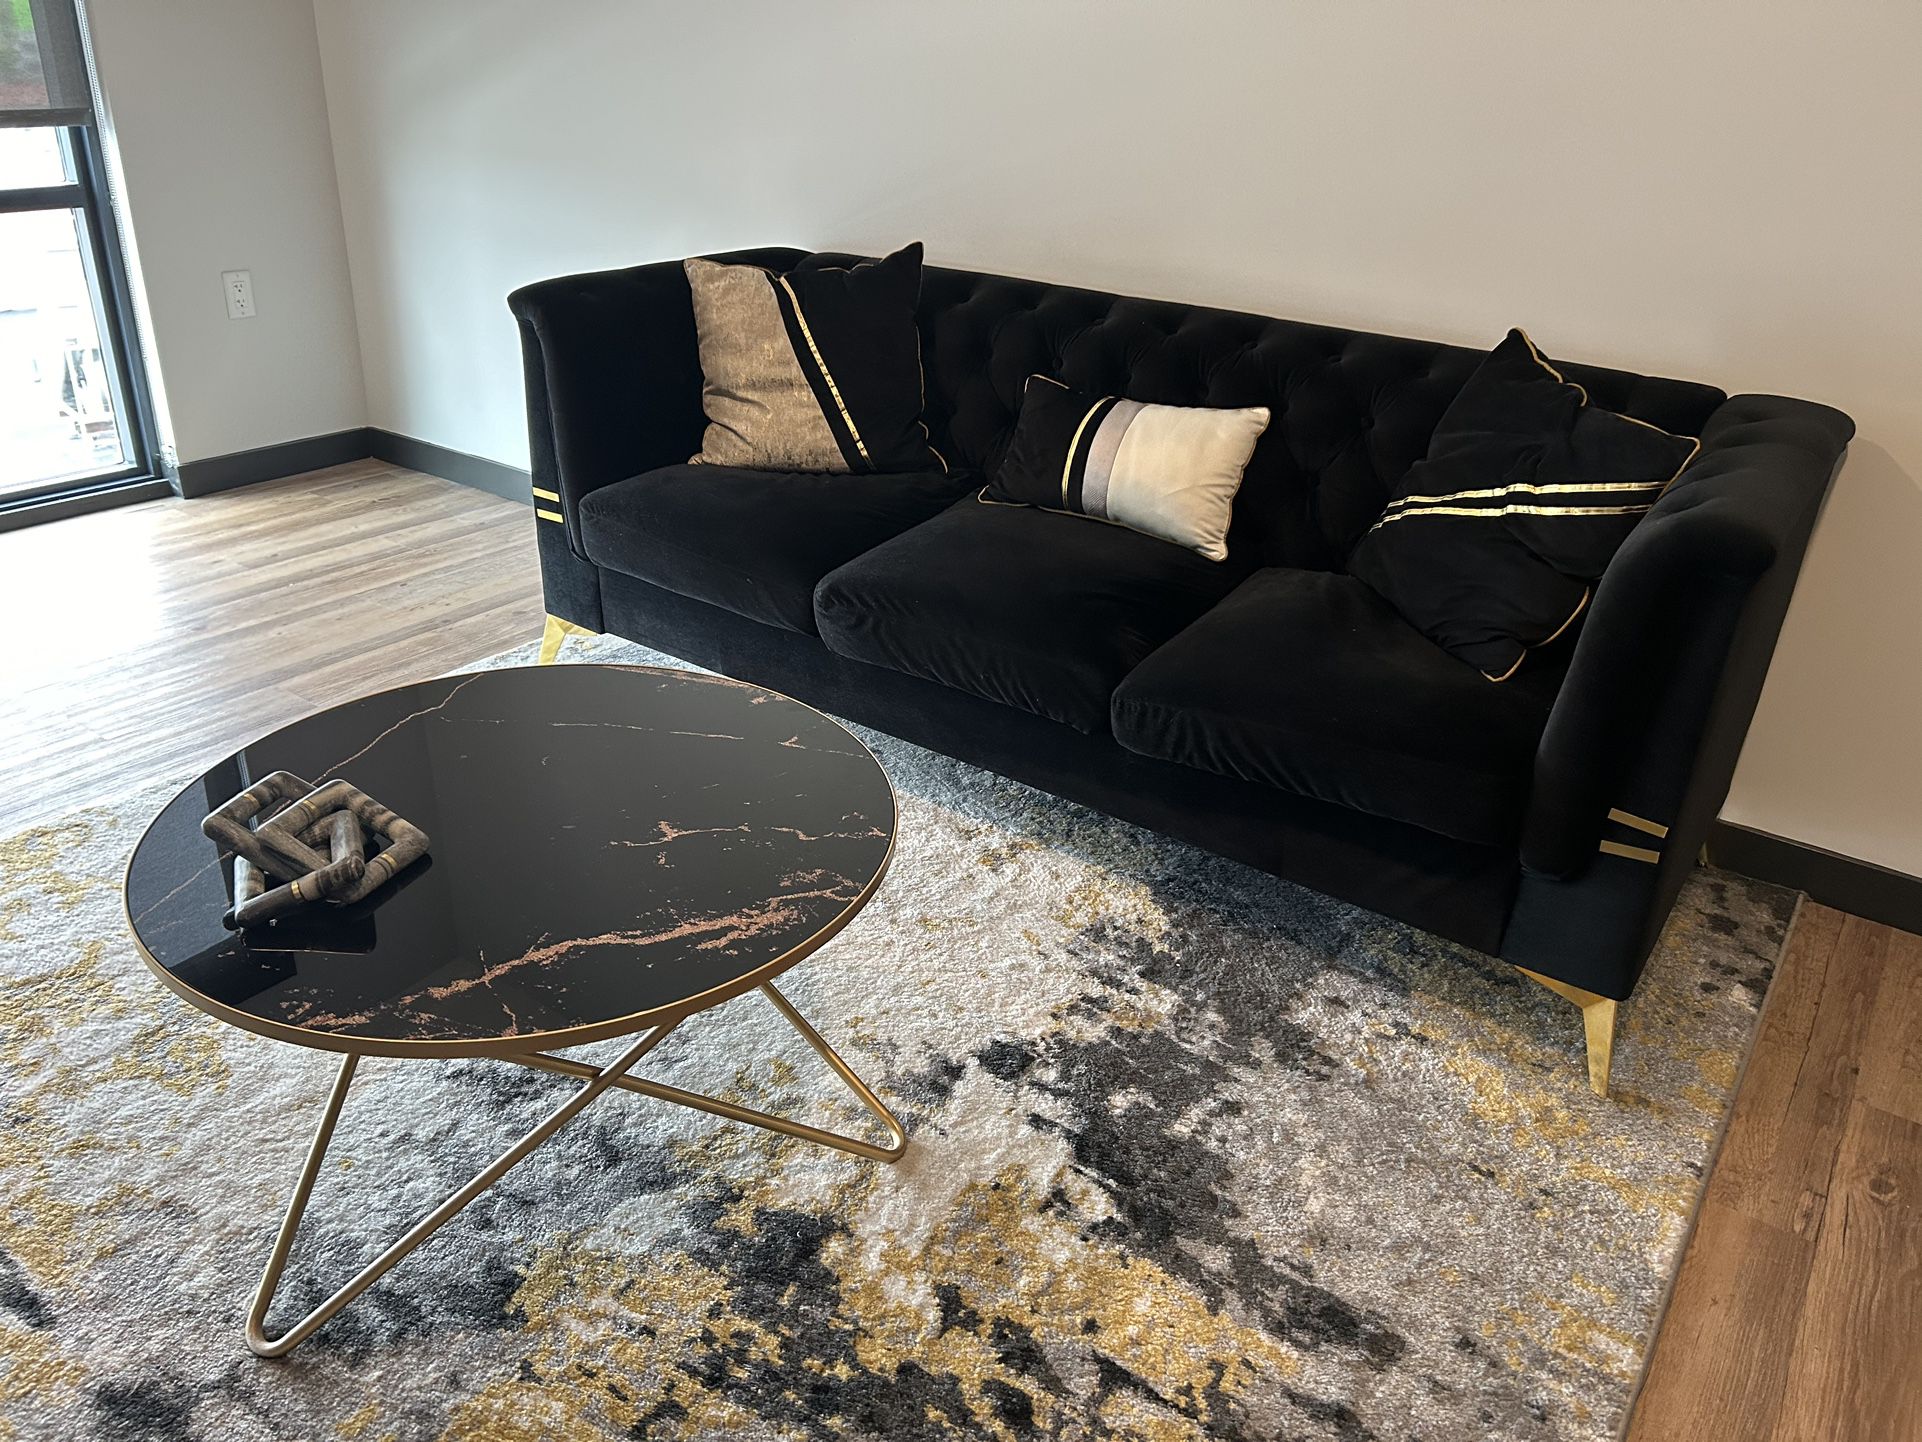 Living Room set (Black and Gold)